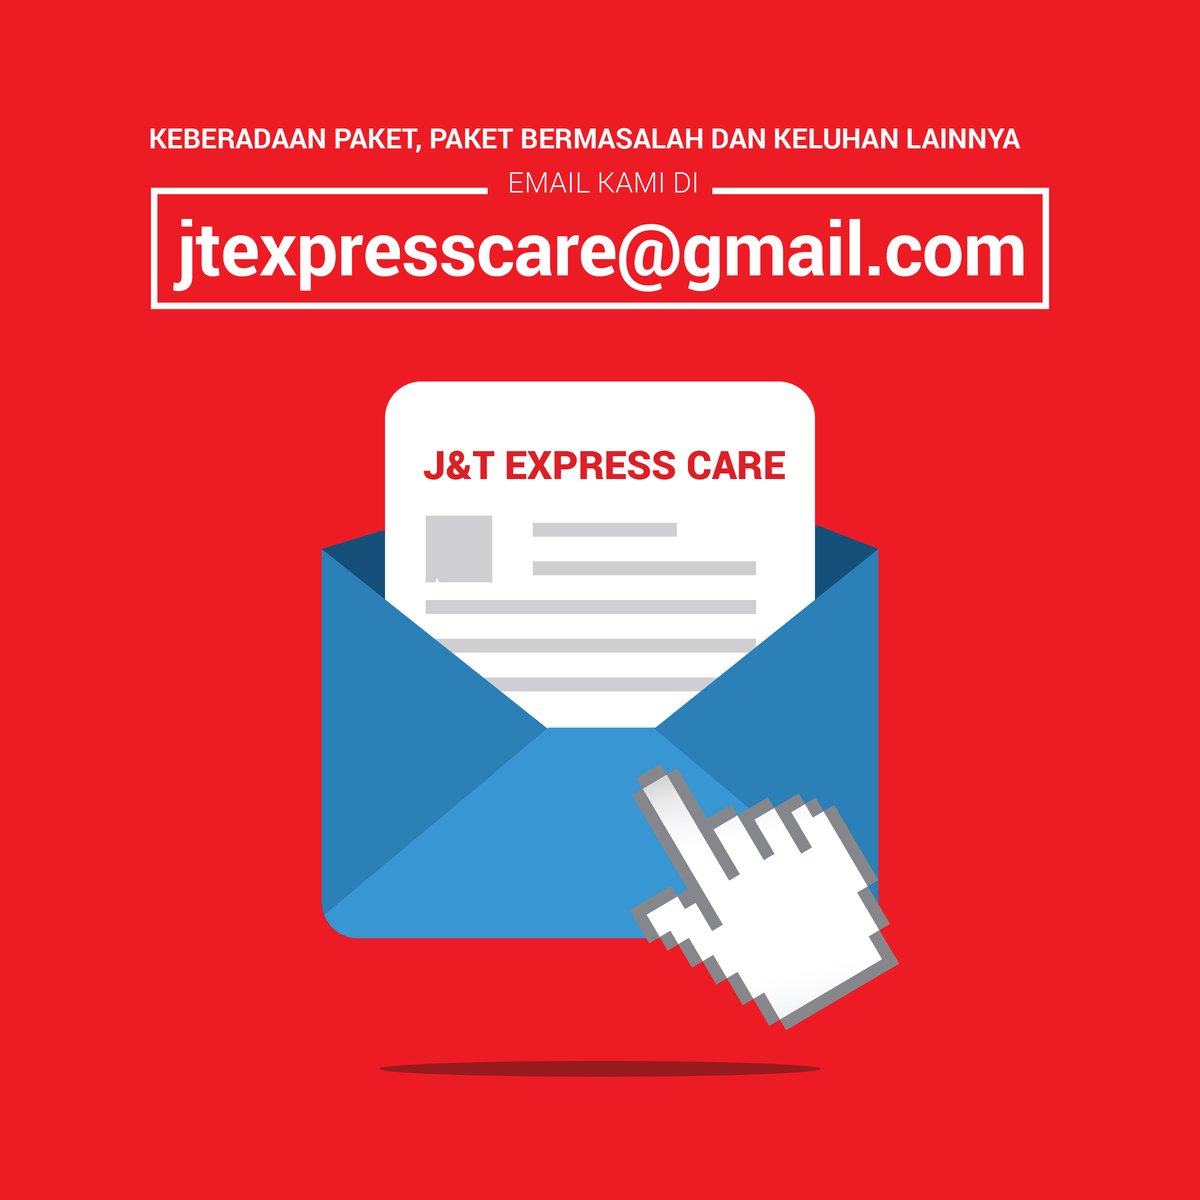 Address j&t email